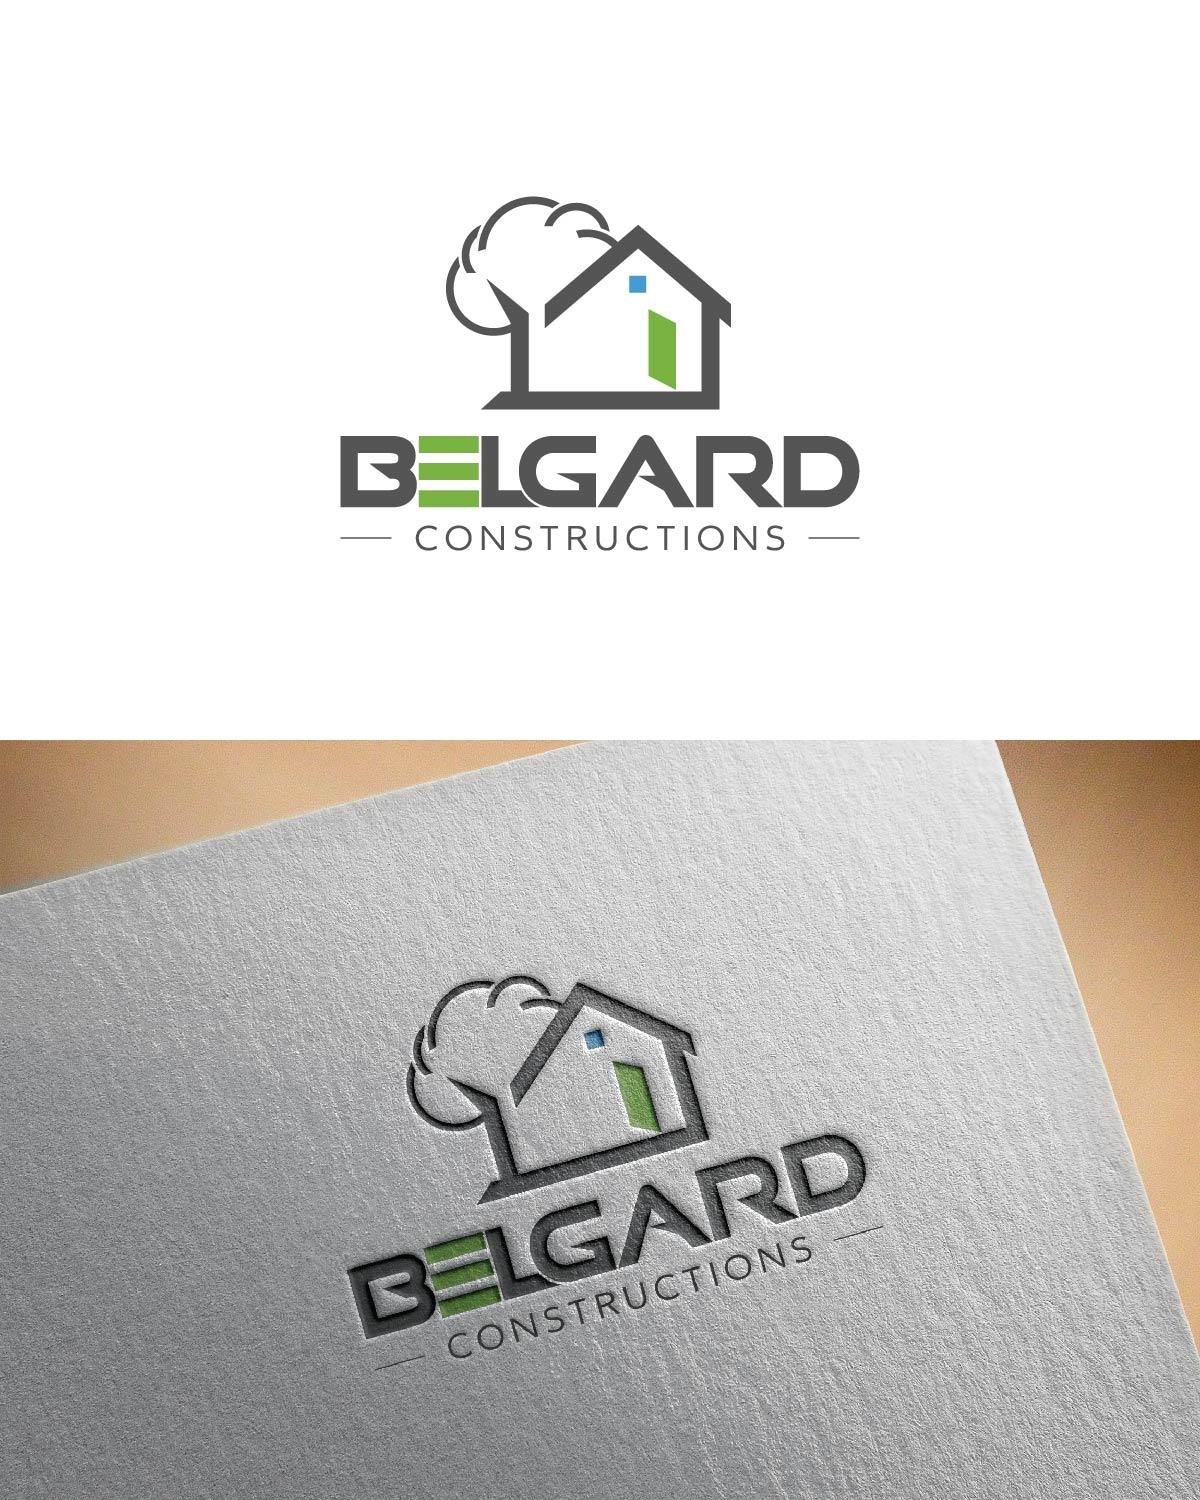 Residential Construction Company Logo - Construction Logo Design for Belgard Constructions by dzine studios ...